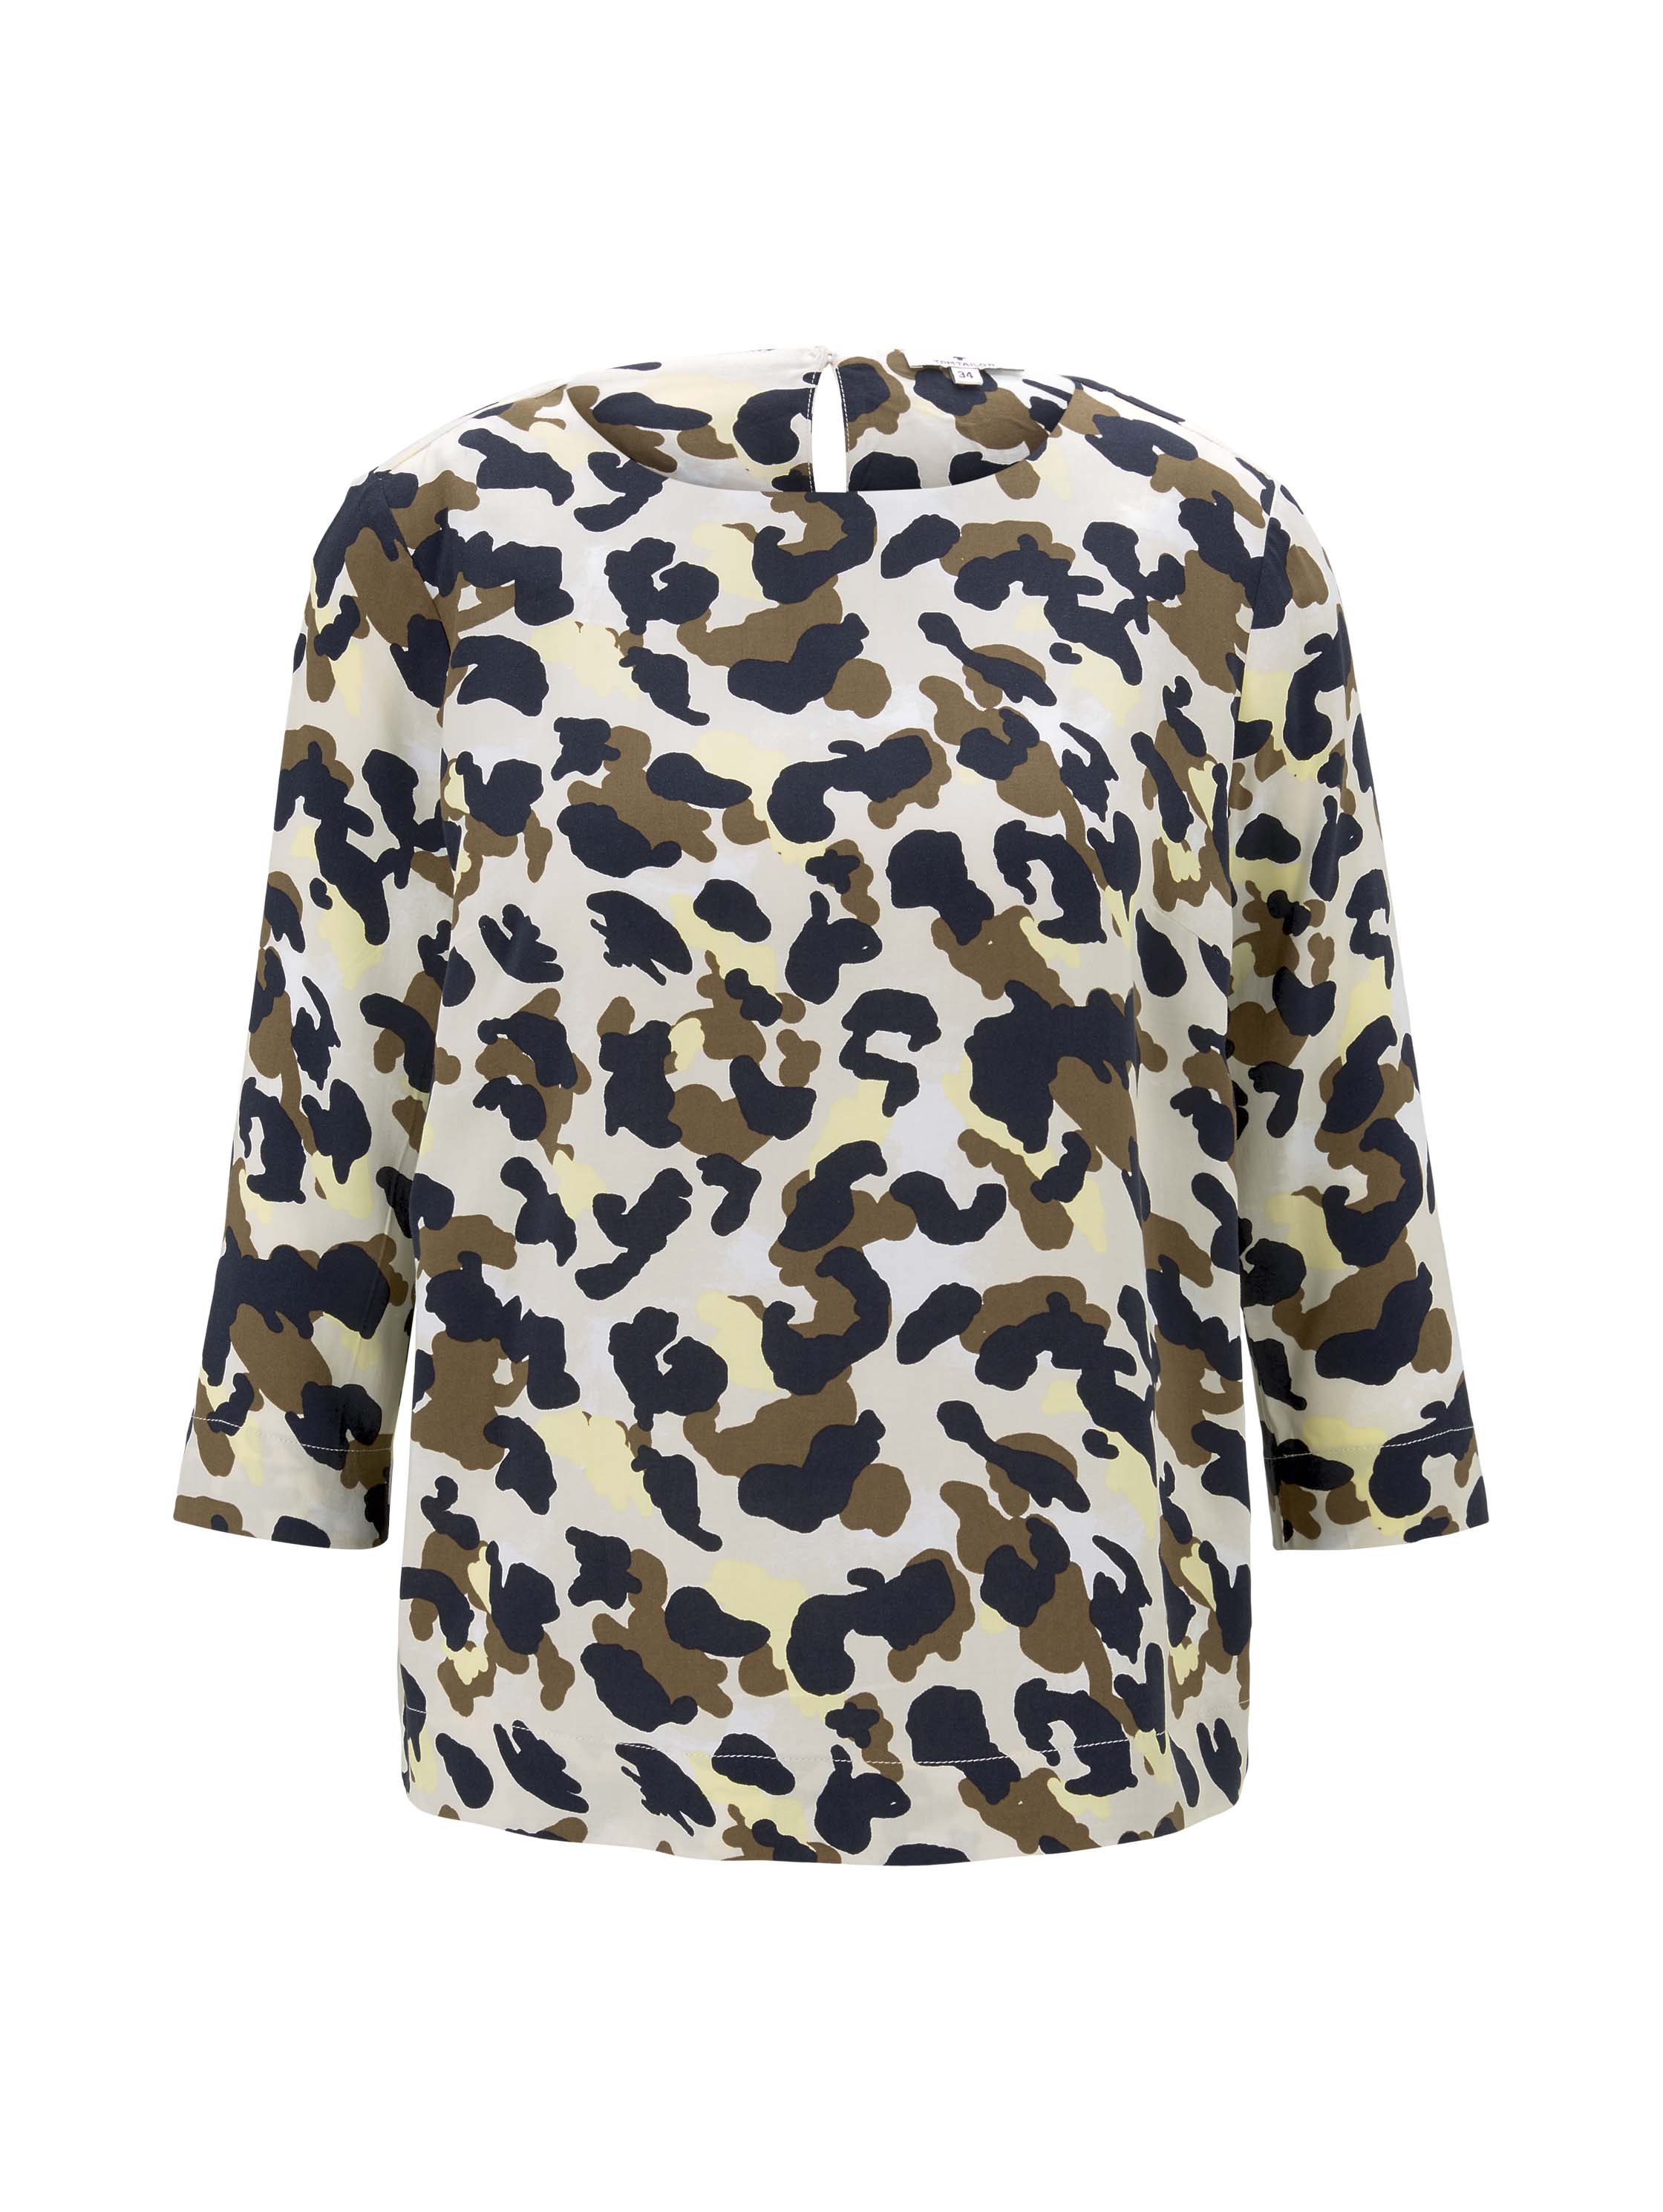 blouse easy shape, khaki yellow camouflage design